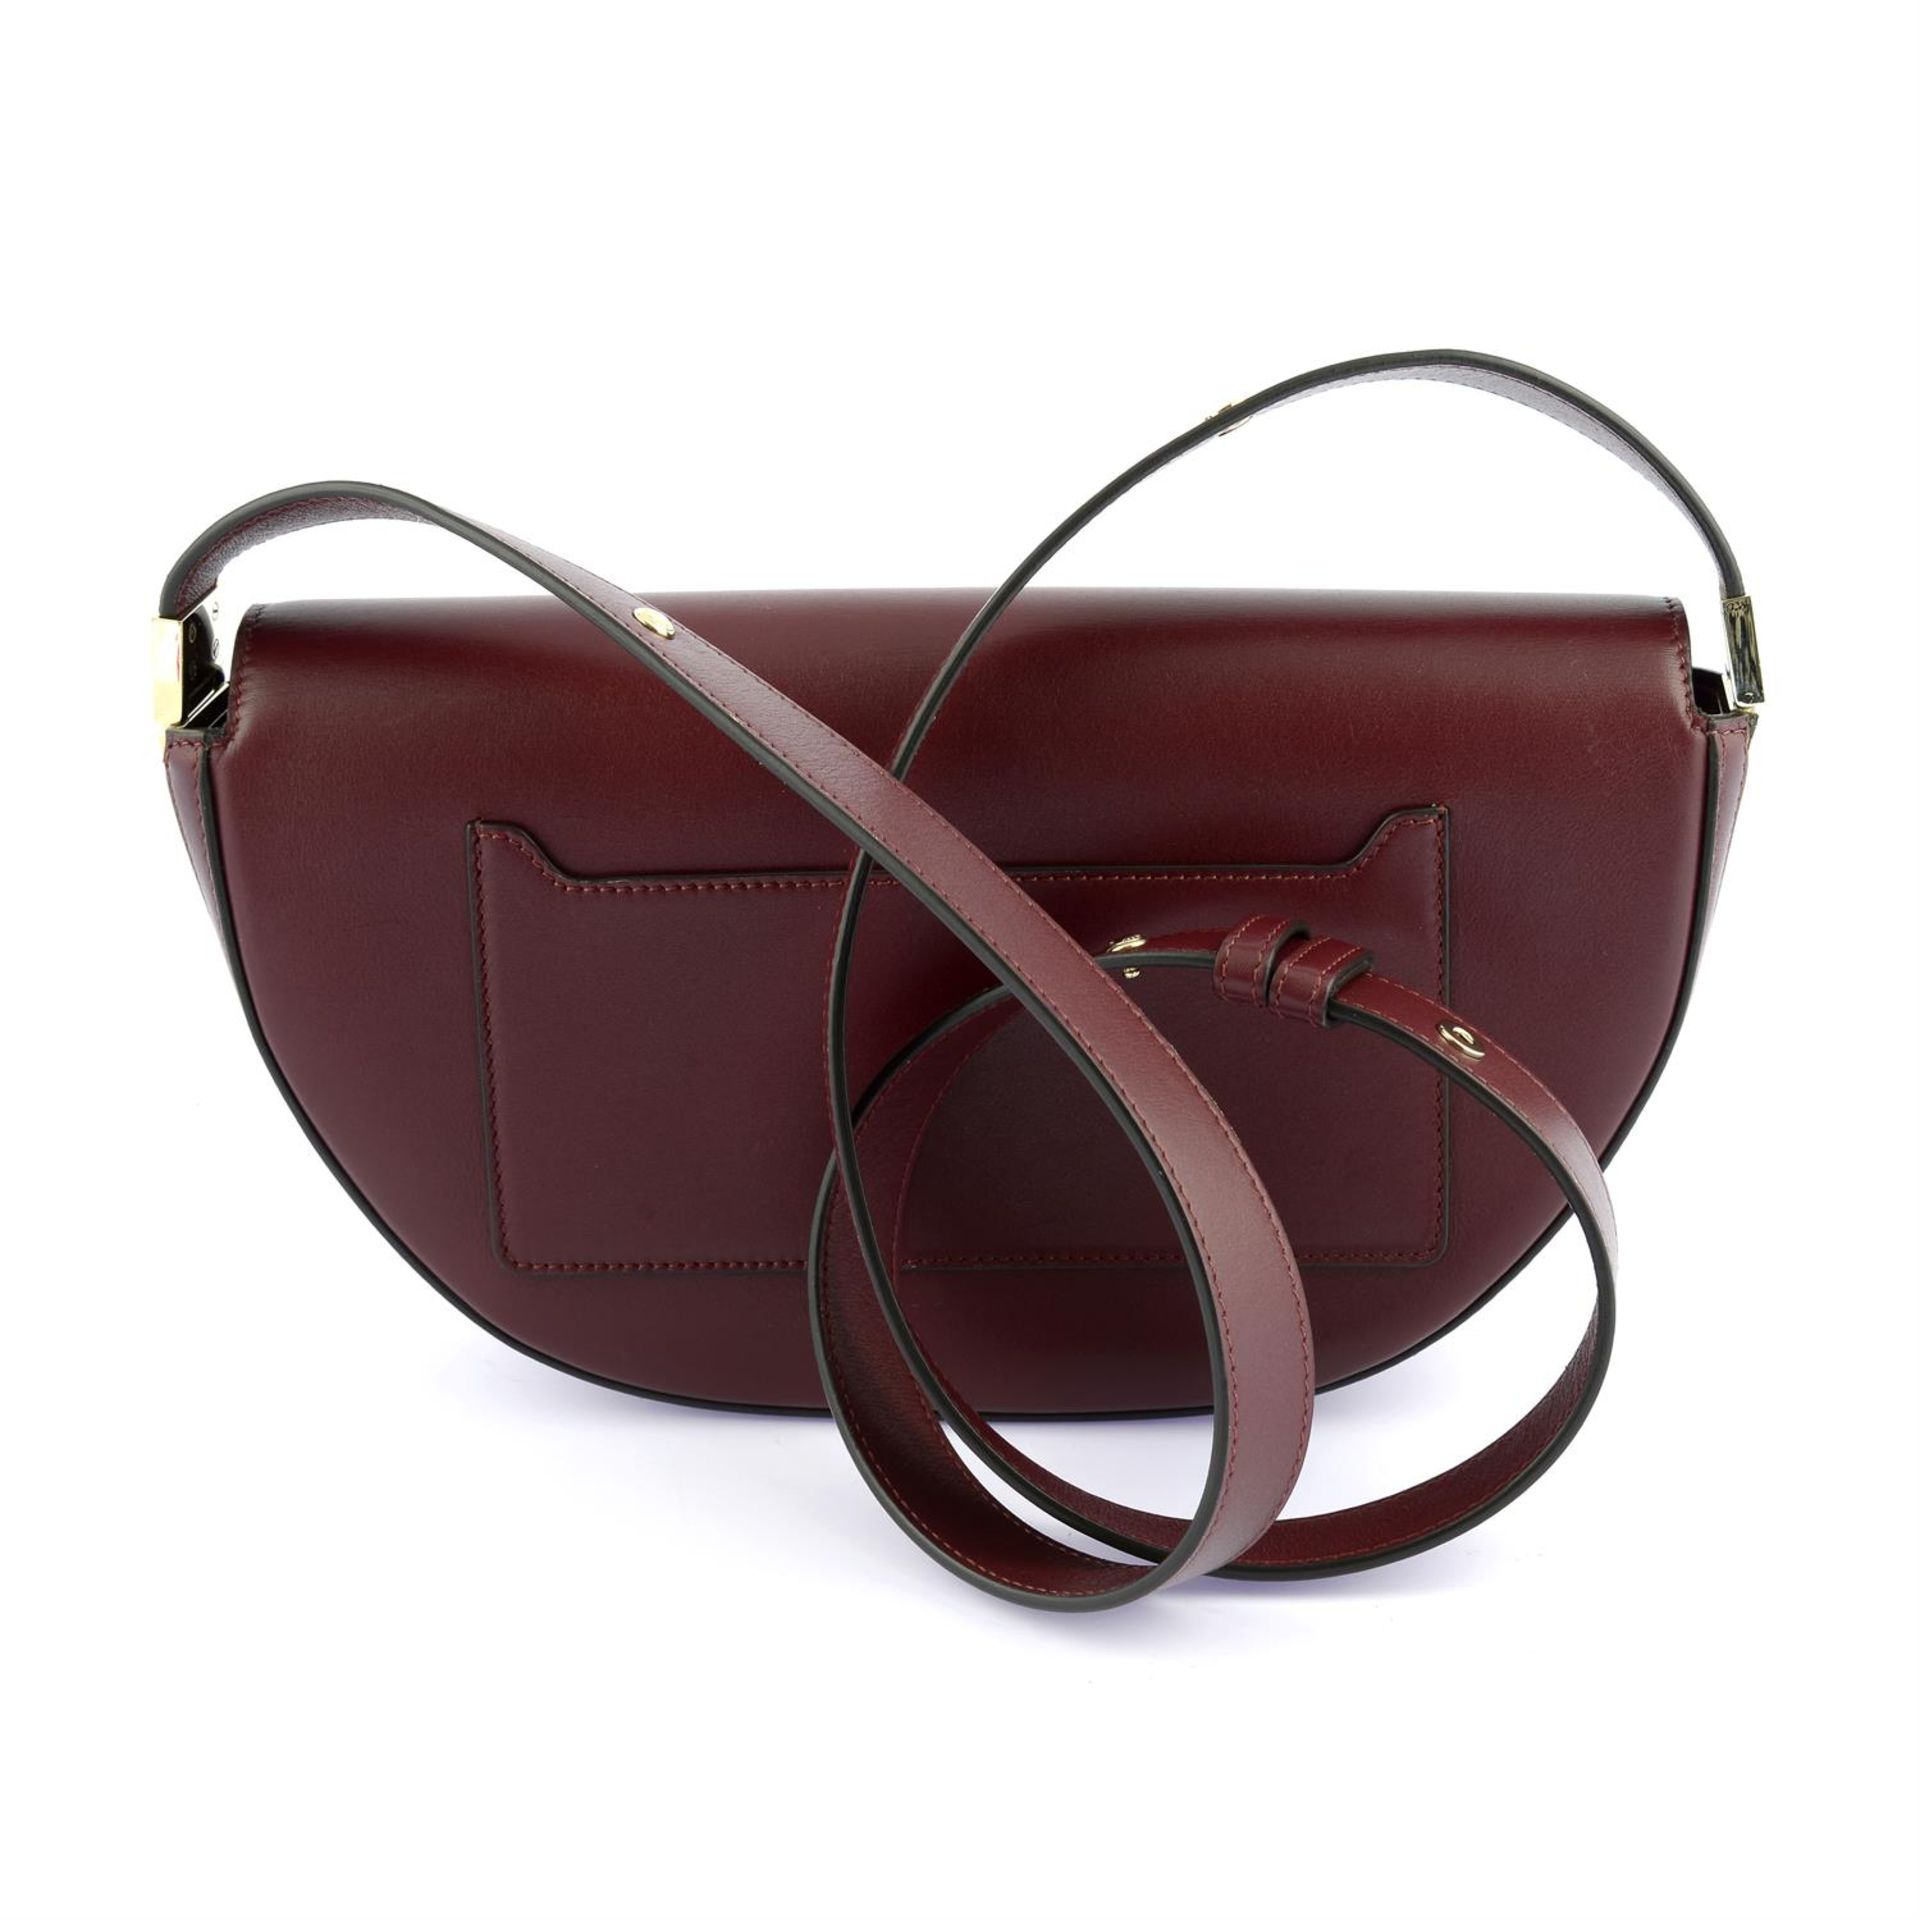 BURBERRY- a burgundy leather Olympia handbag. - Image 2 of 4